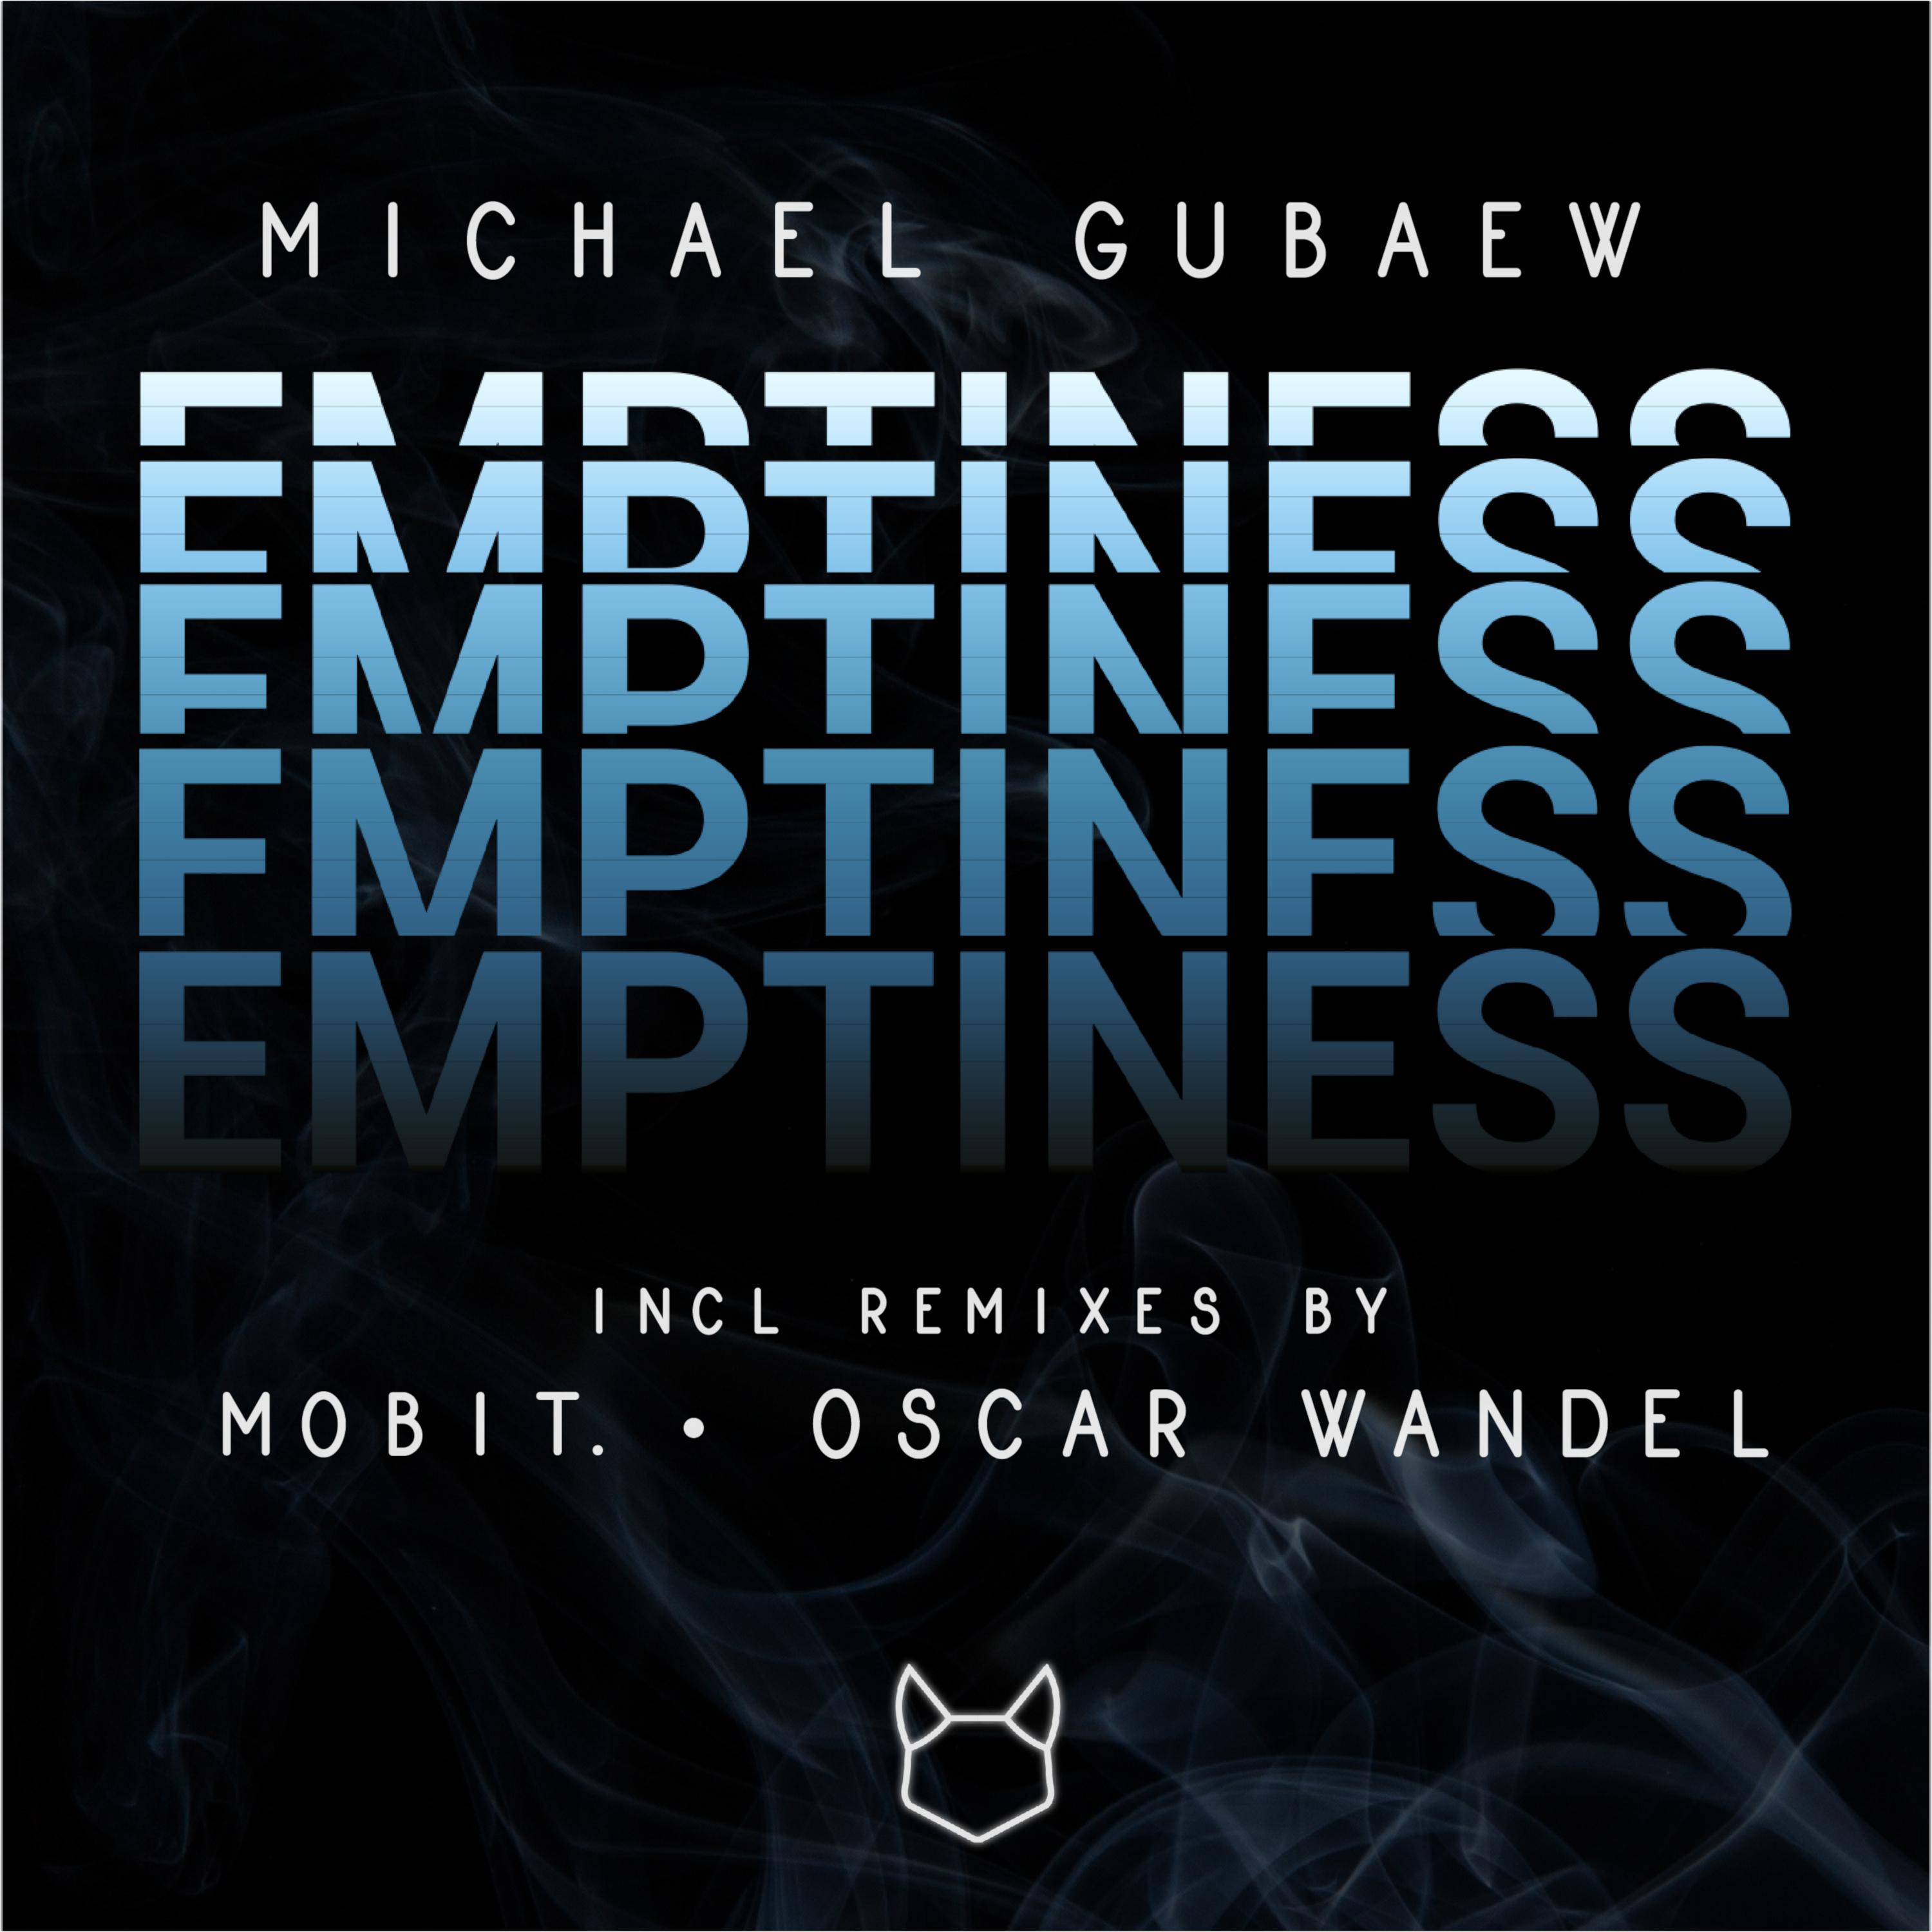 Michael Gubaew - Emptiness (Oscar Wandel Remix)